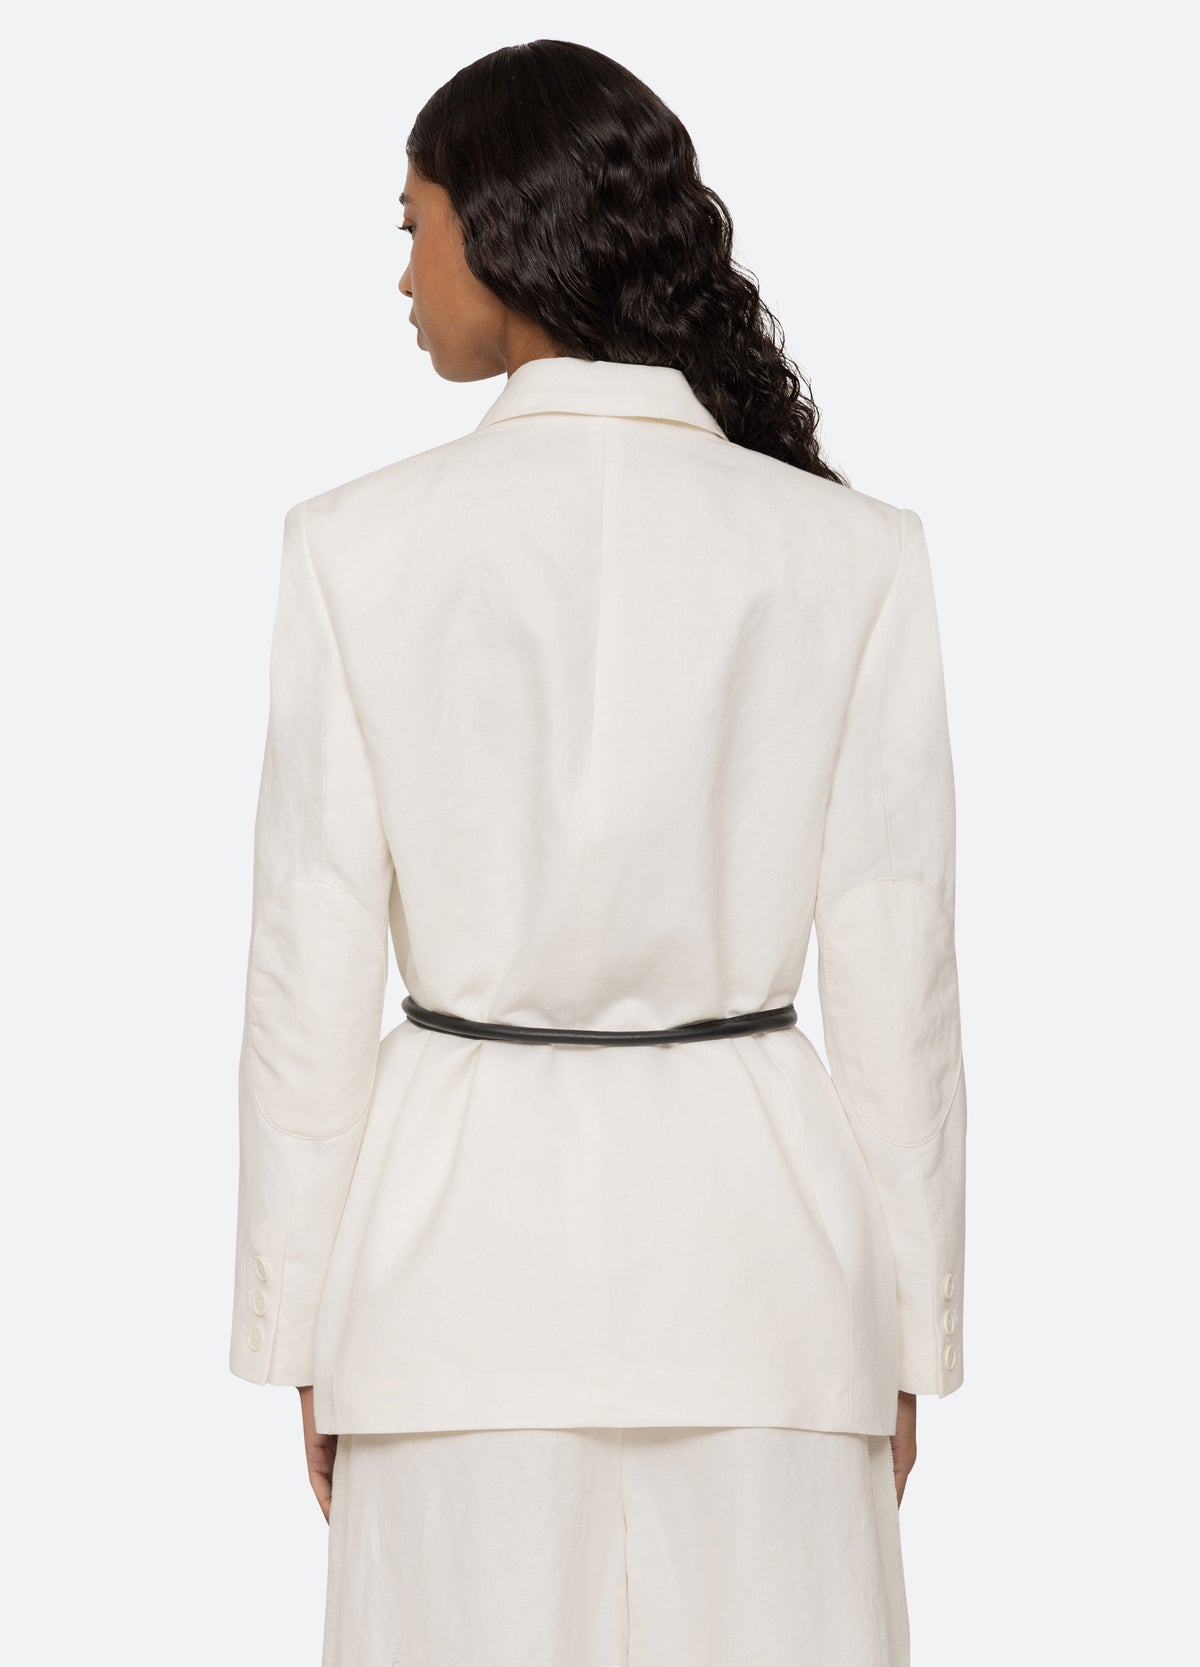 white-lara jacket-back view - 10